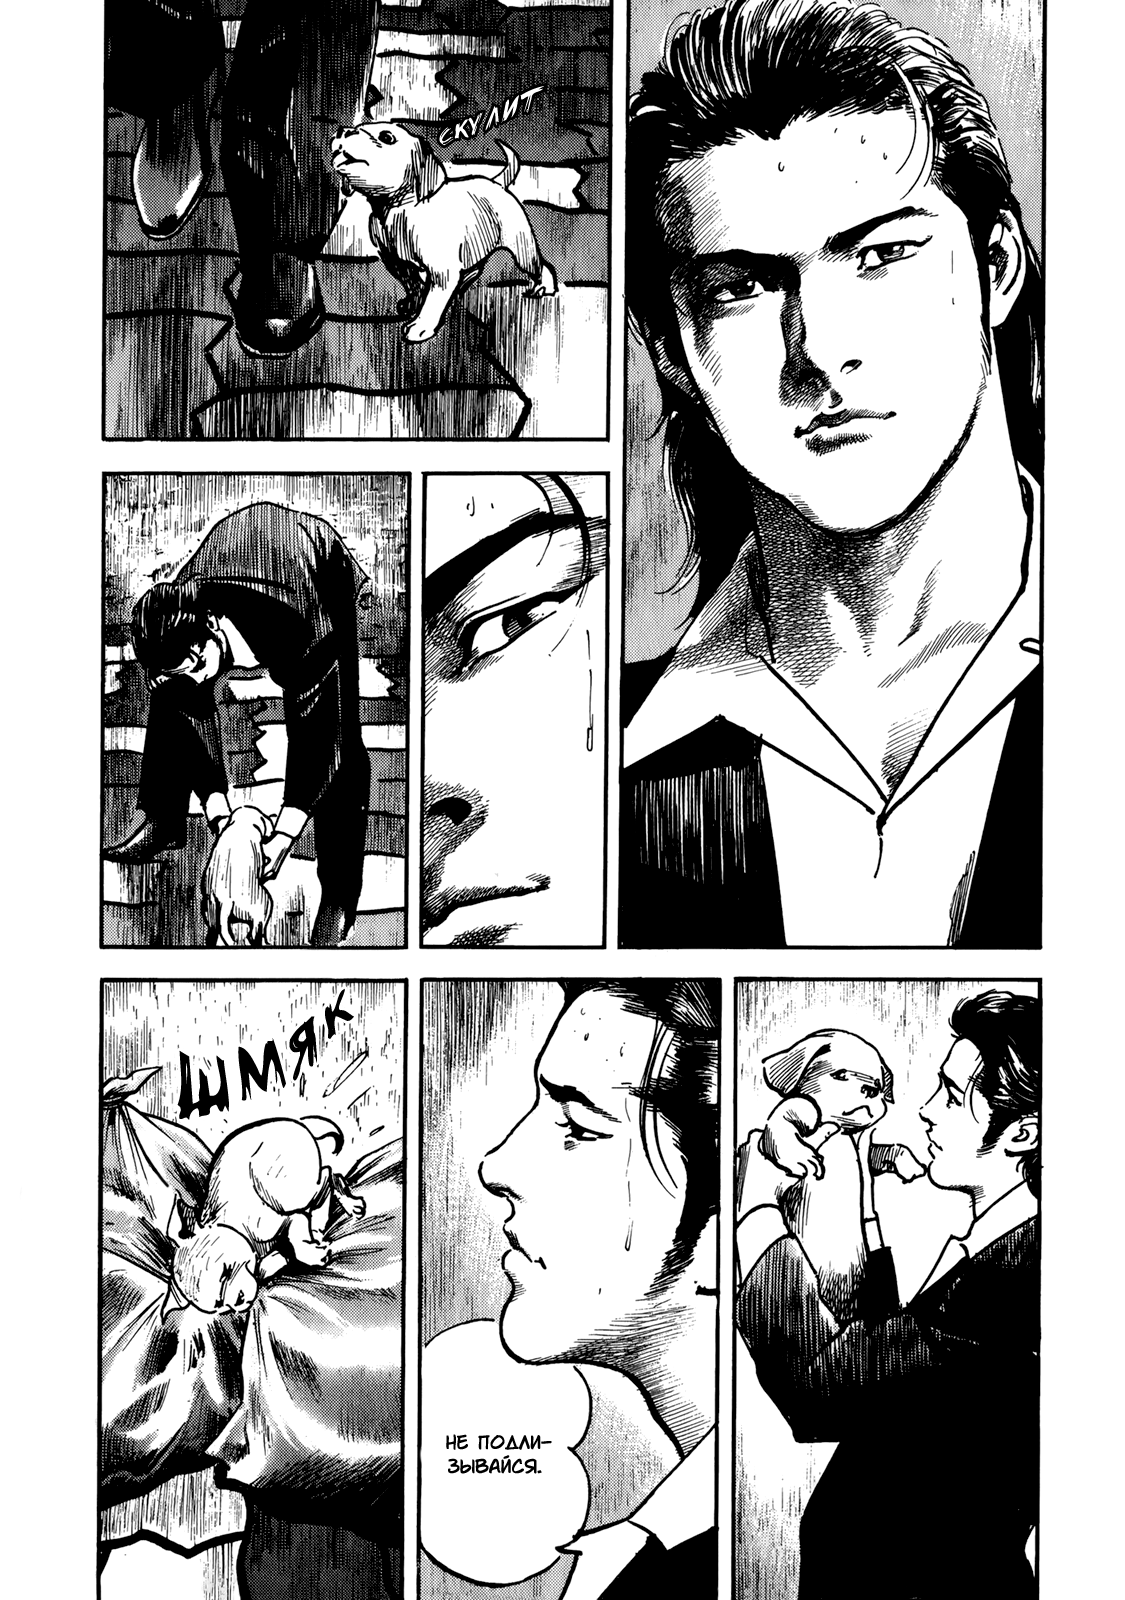 Warmth chapter 2. Heat Manga. Накал Манга. Прожигая жизнь Манга. Ryoichi Ikegami.